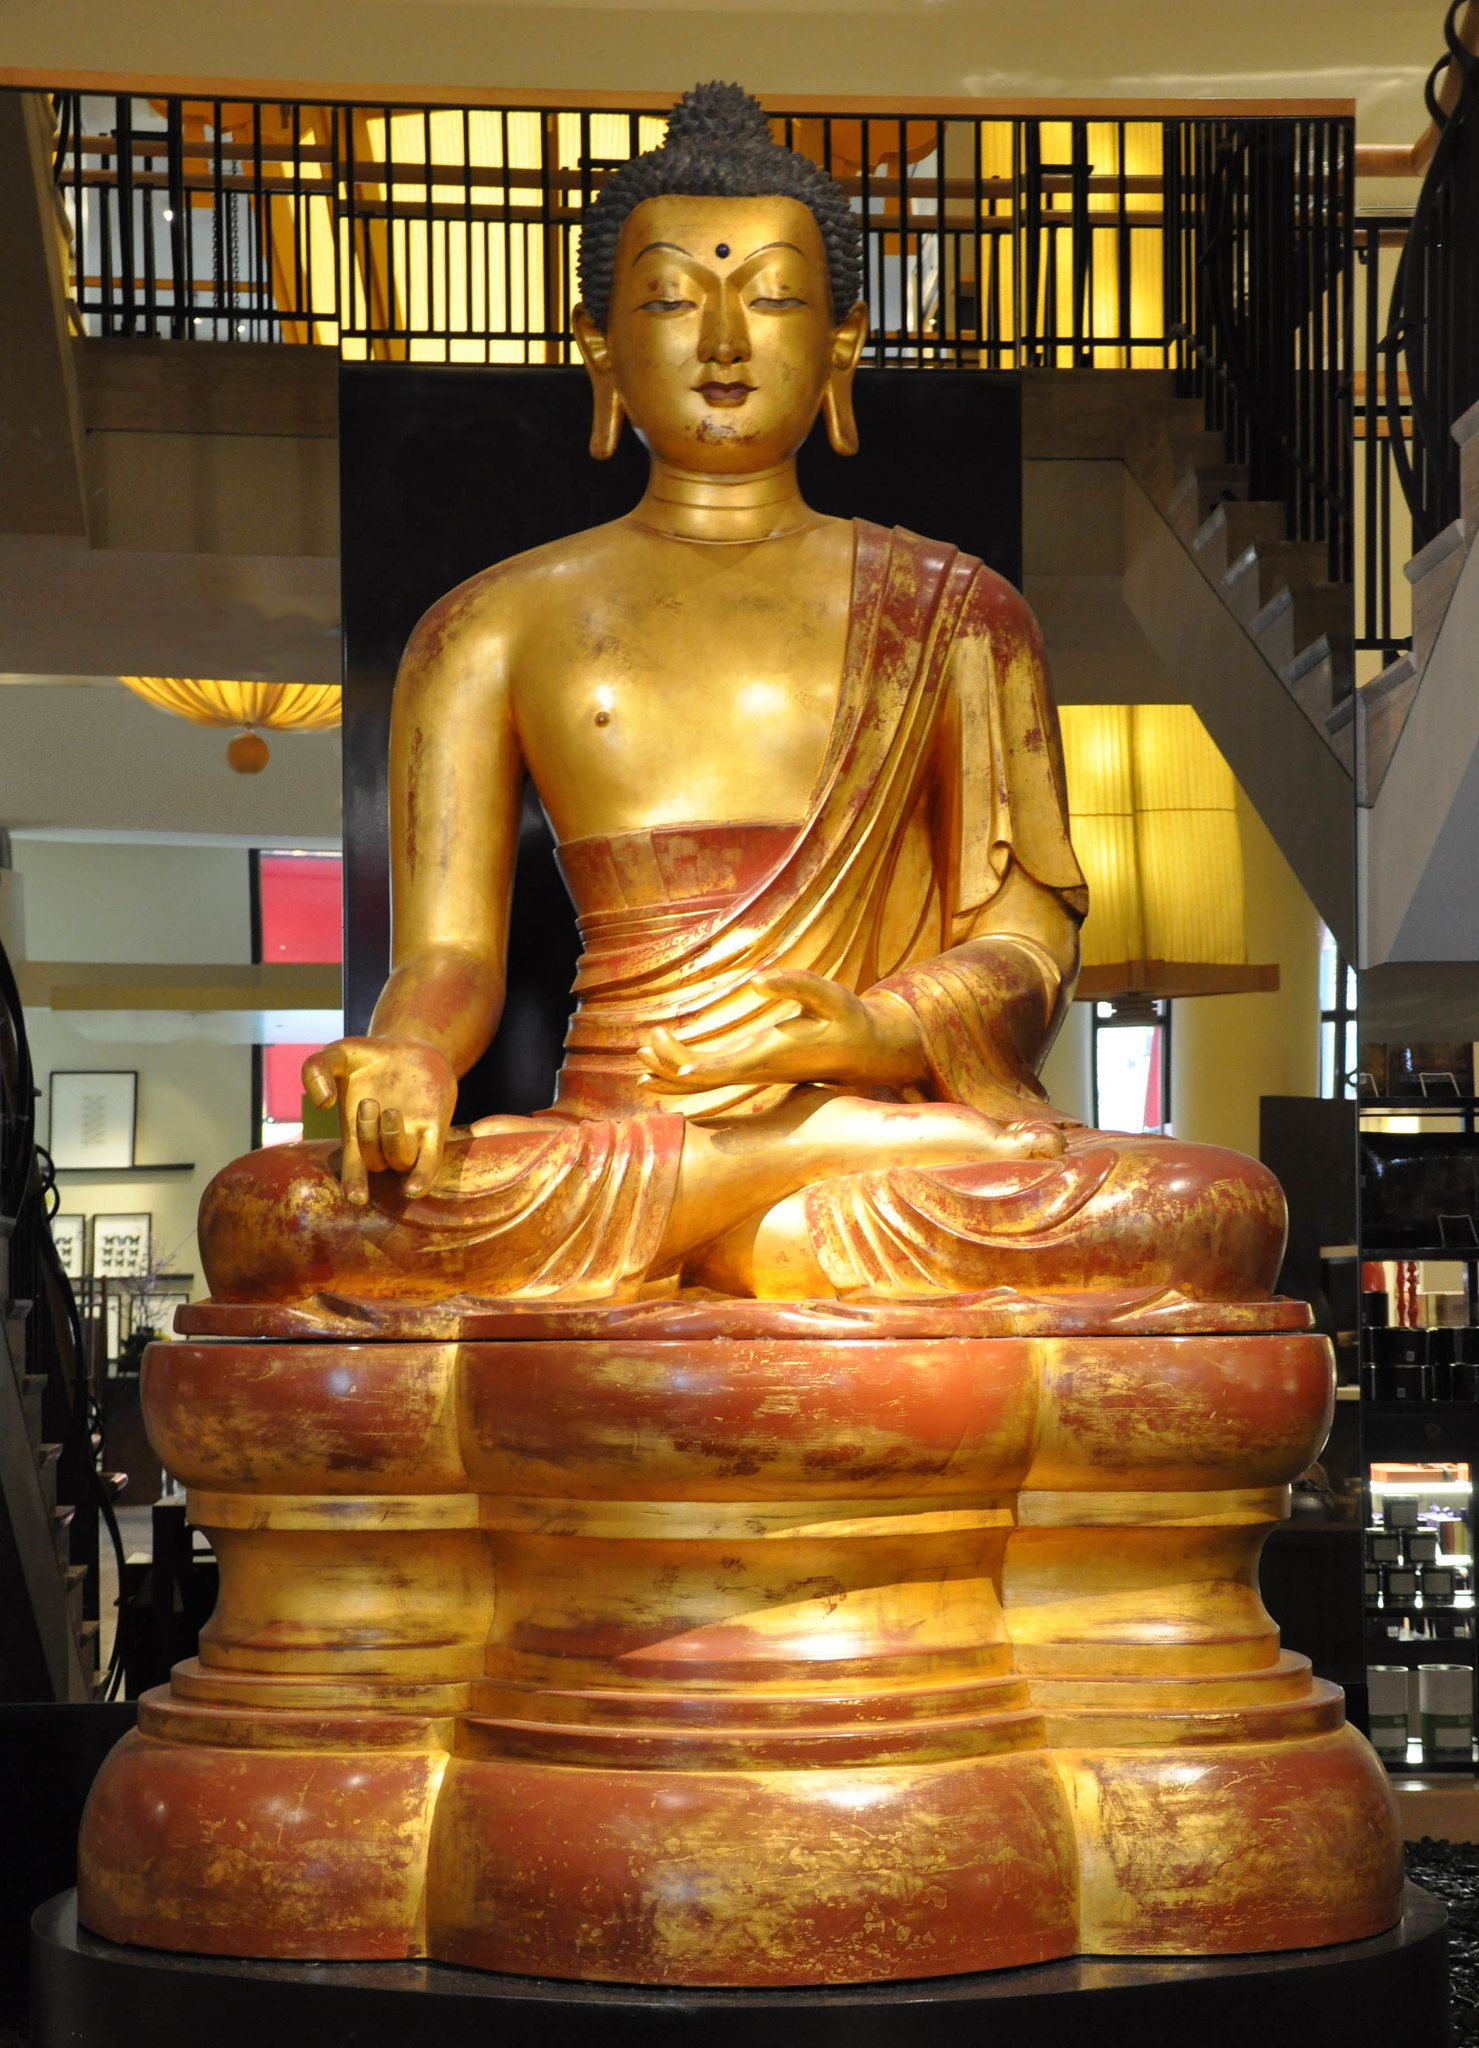 Gump's San Francisco Medicine Buddah Statue